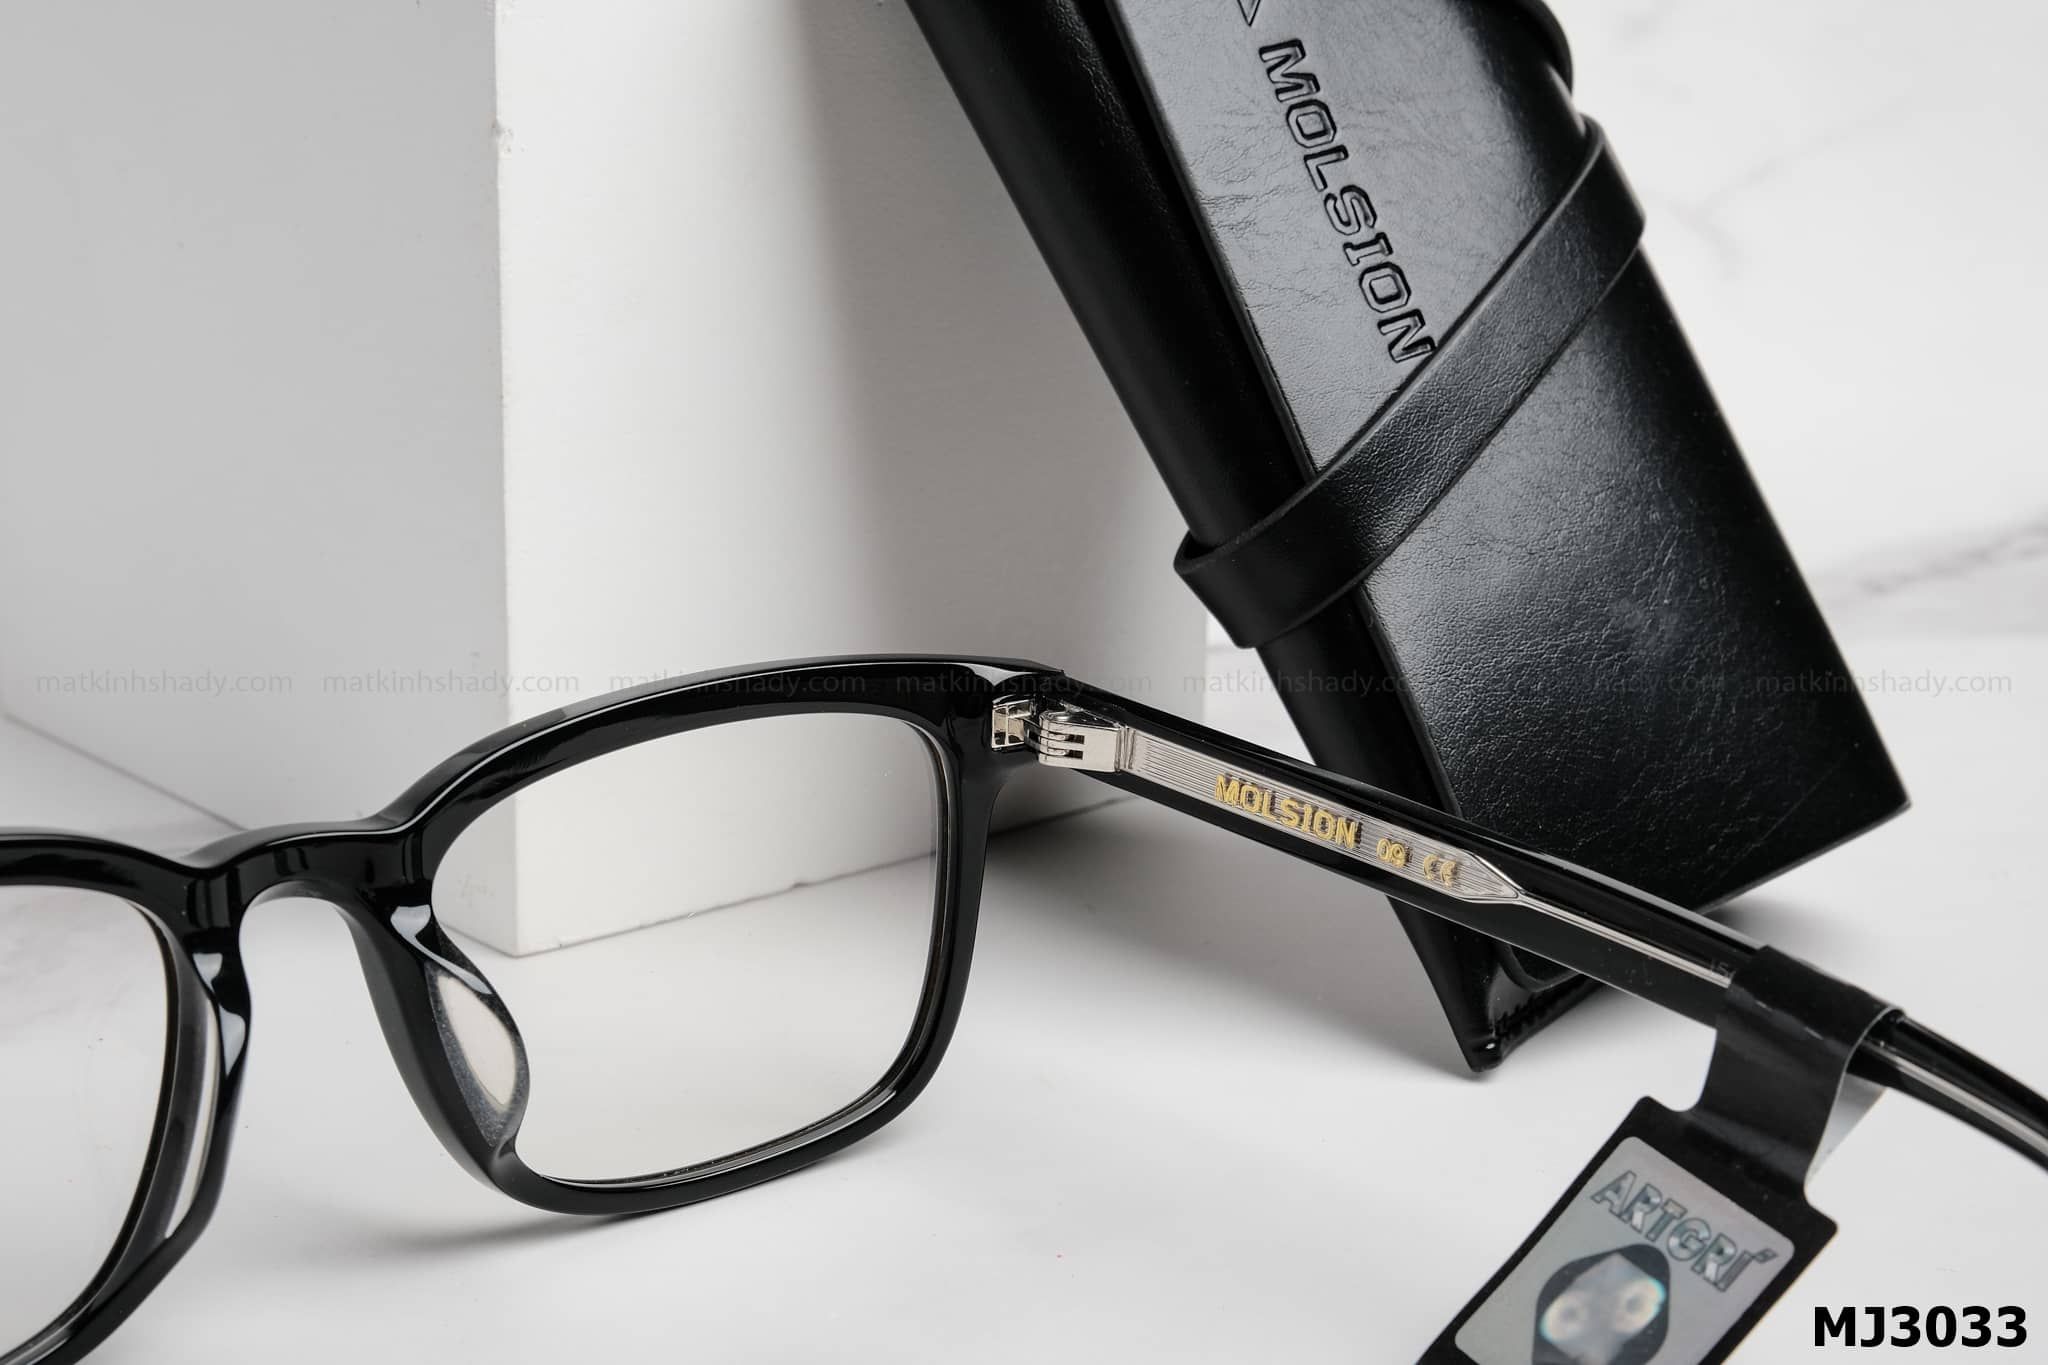  Molsion Eyewear - Glasses - MJ3033 